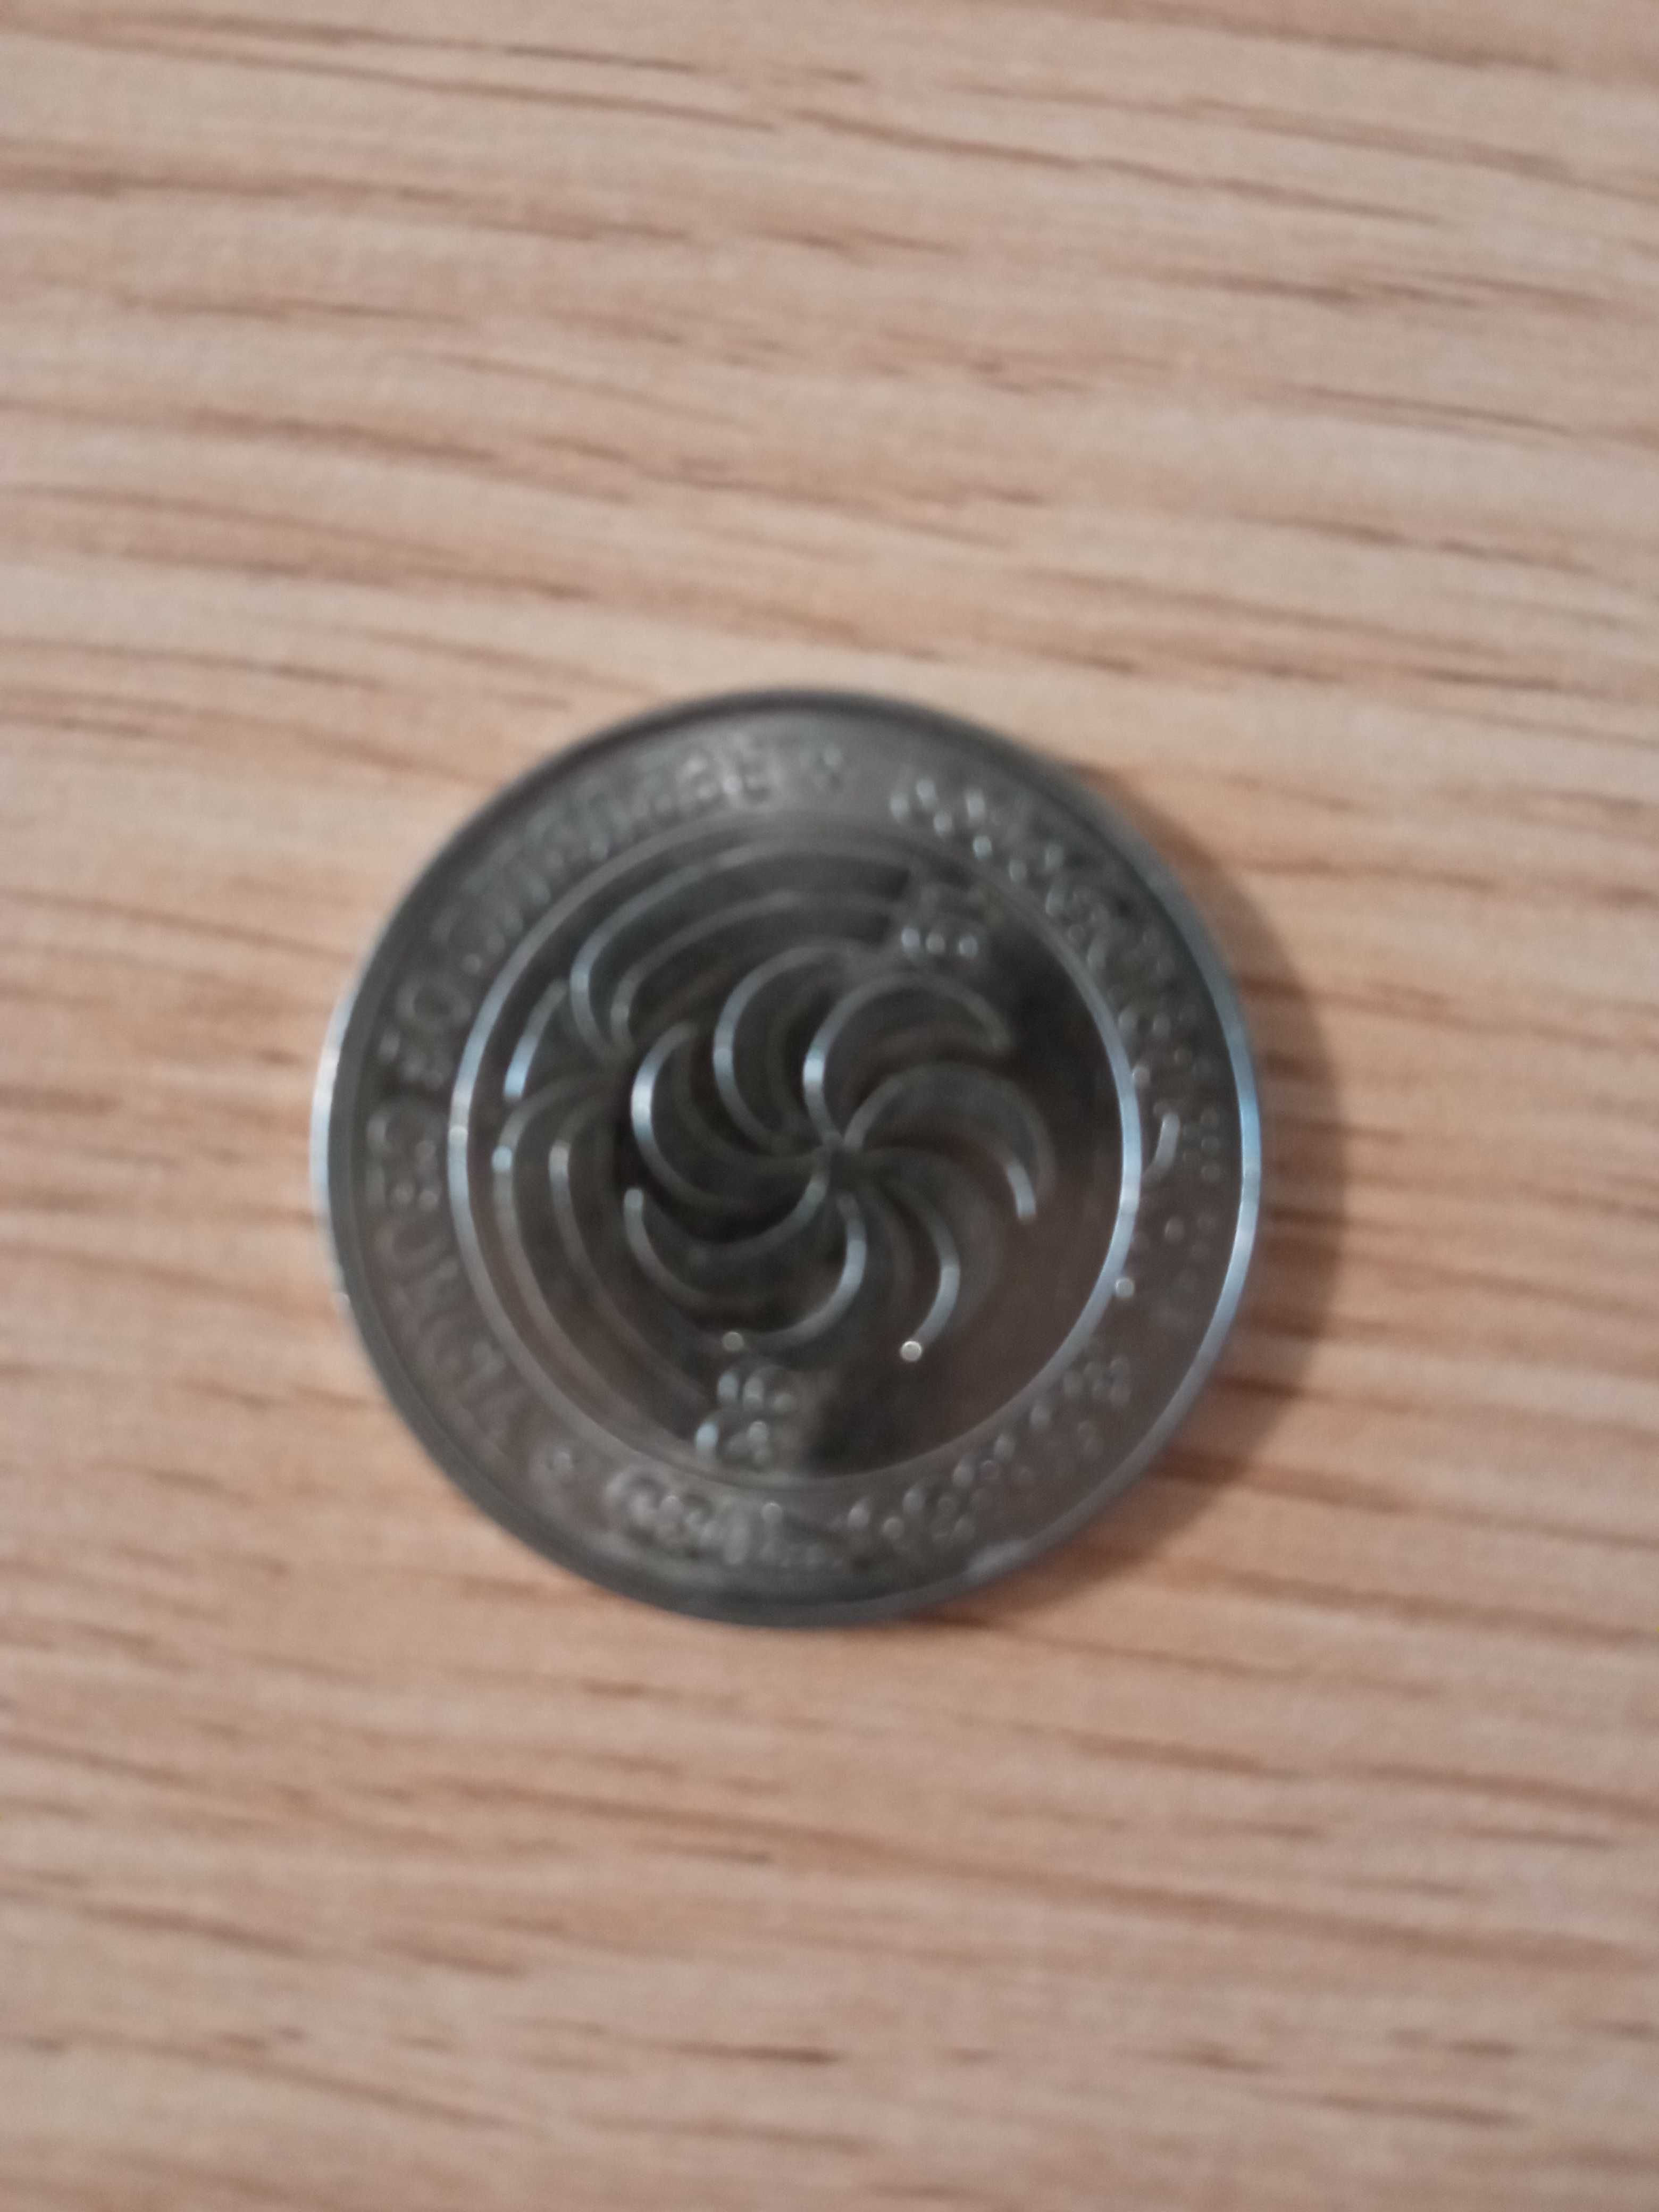 Монета 20 тетри 1993 года(Грузия)